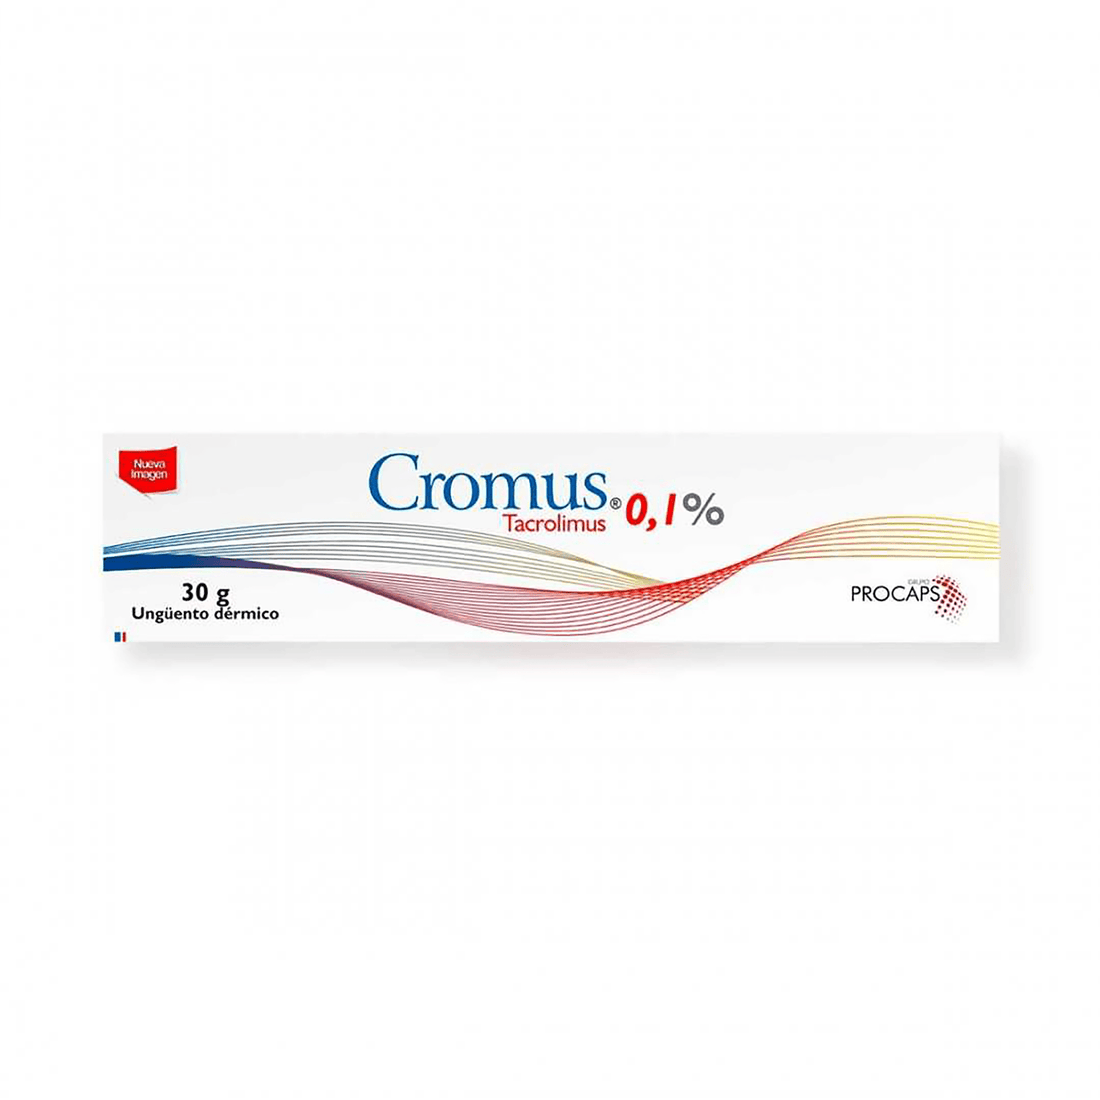 Cromus Tacrolimus 01% 30gr PROCAPS® - LASKIN